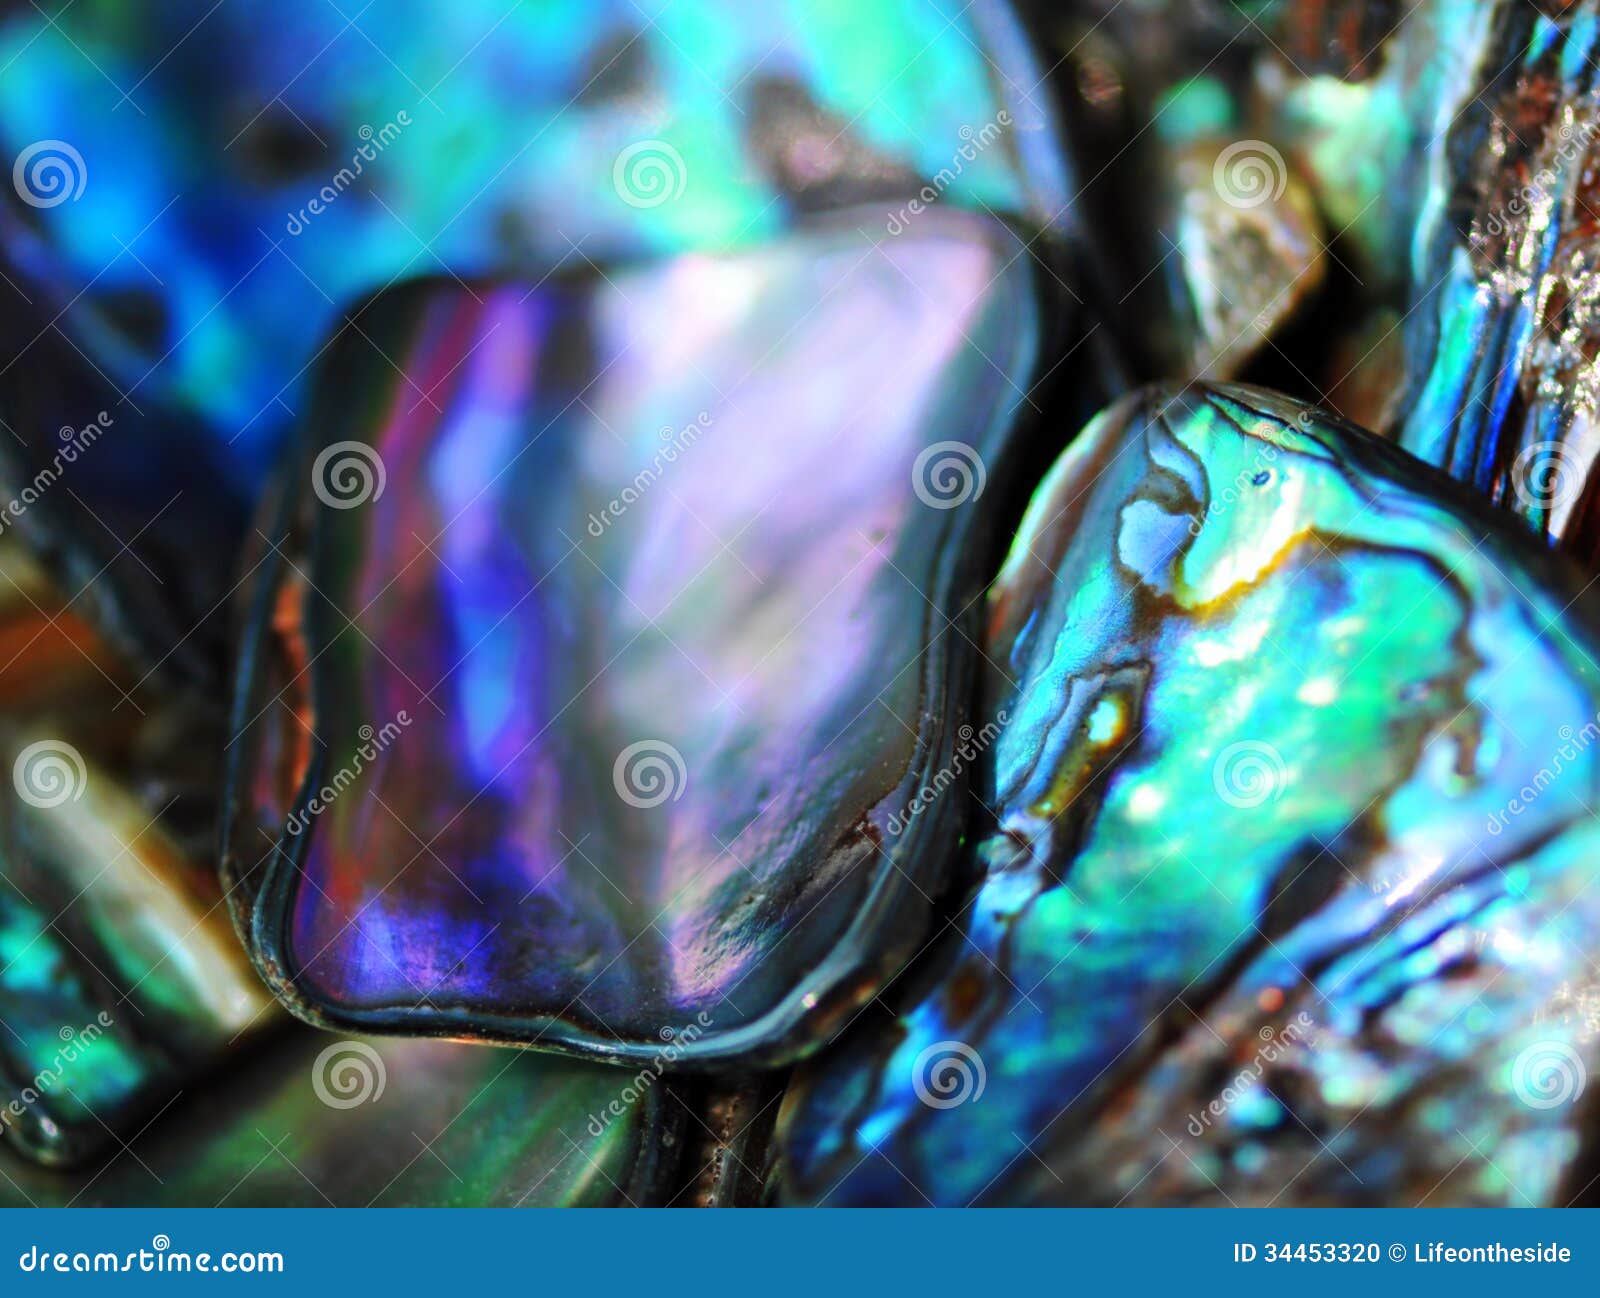 bright vibrant colorful paua shell background